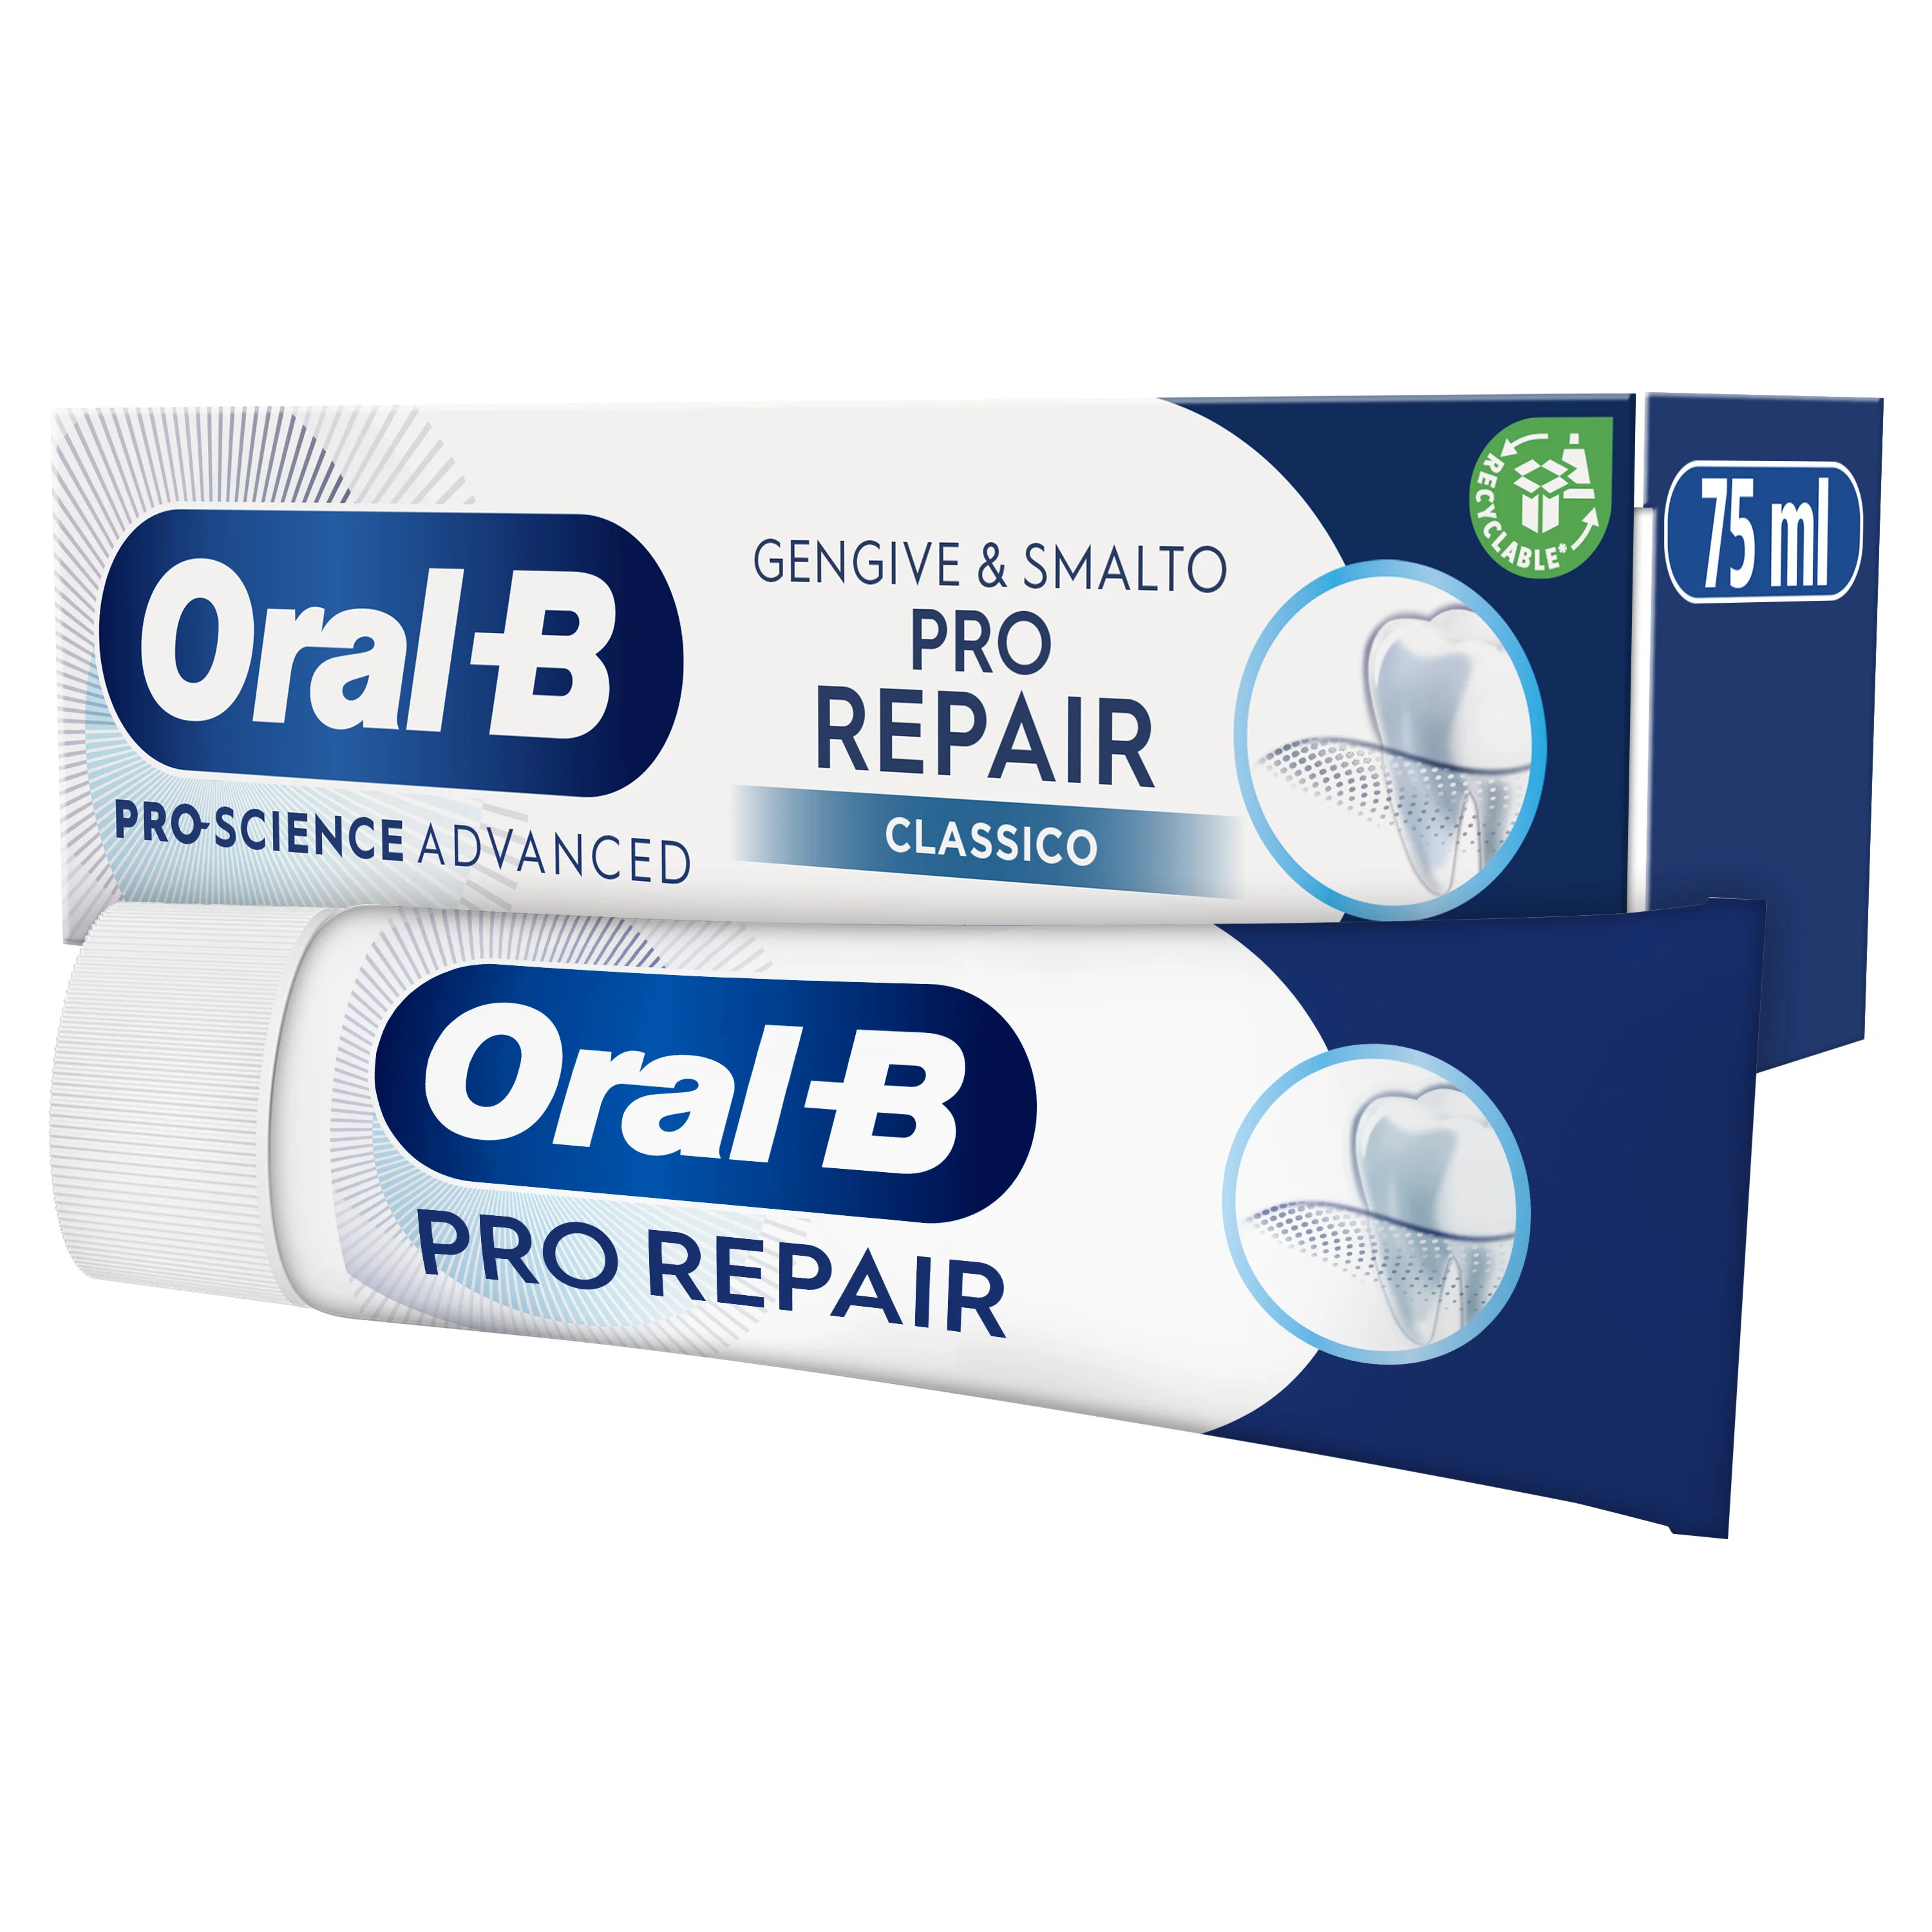 Oral-B Dentifricio Pro-Science Gengive & Smalto Repair [Classico-Menta -  5x75ml] »